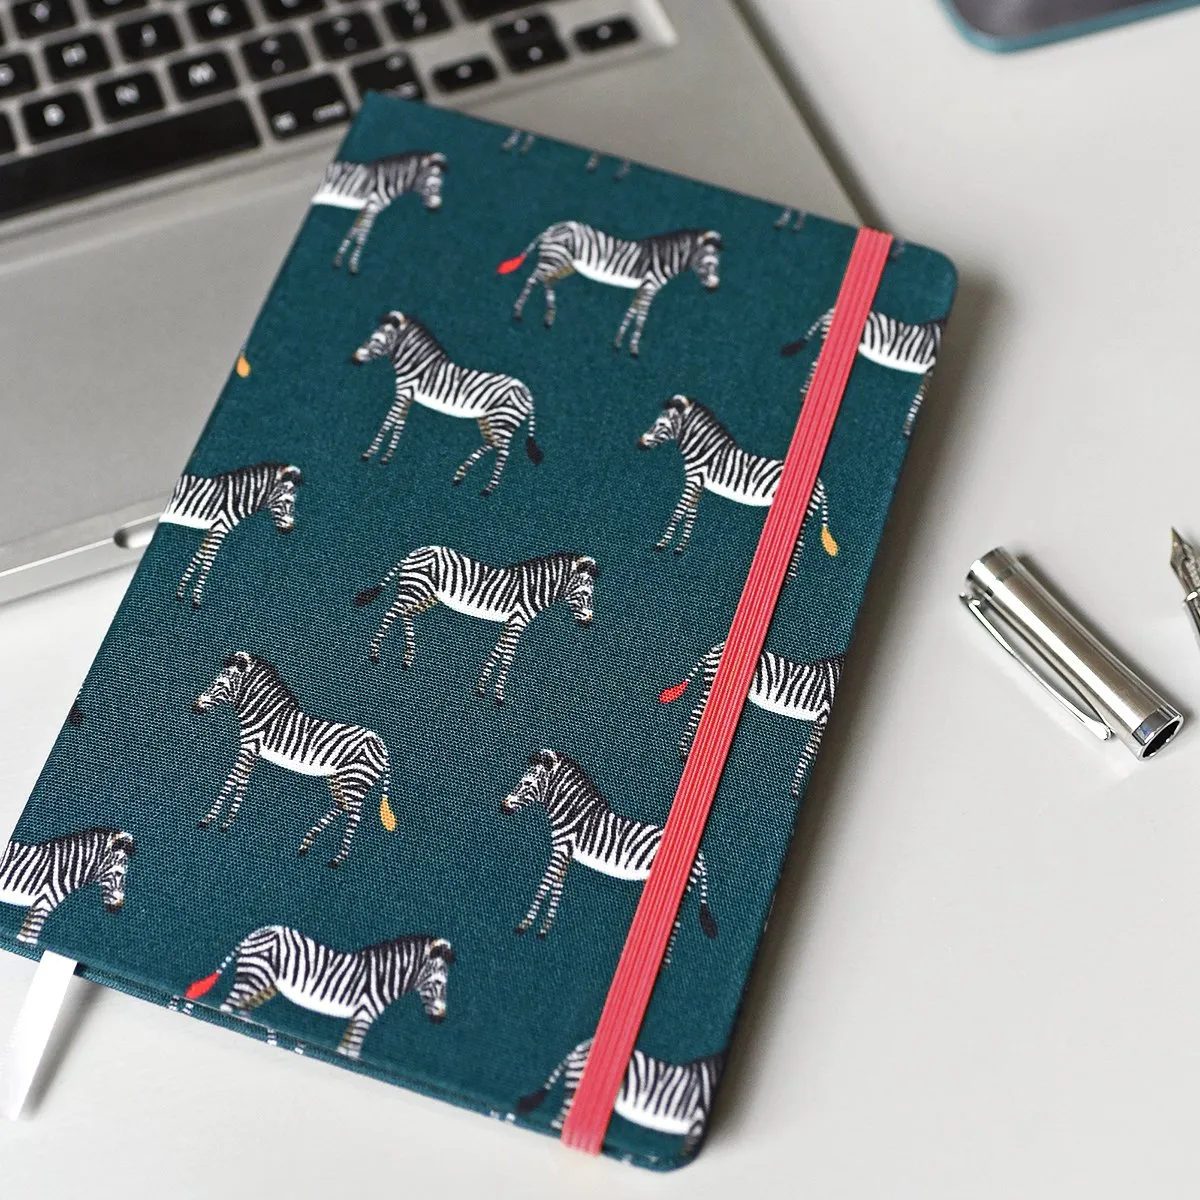 Zebra notebook lifestyle shot